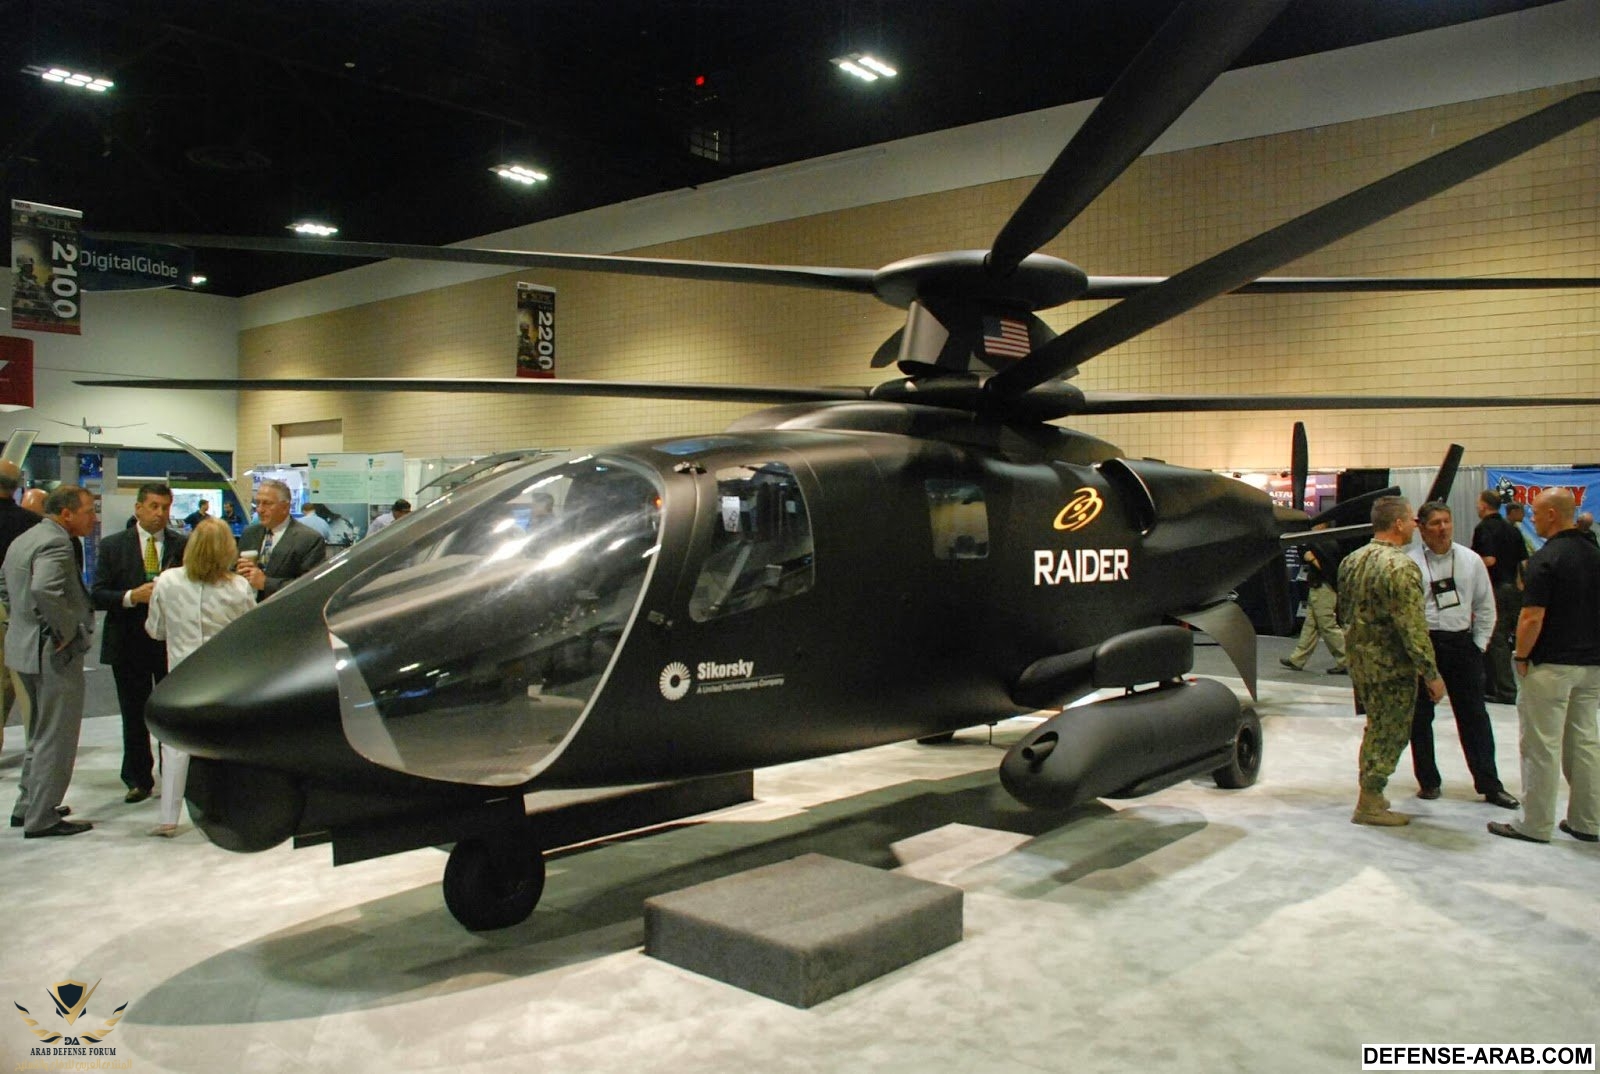 weaponized Sikorsky RAIDER DSC_0068.JPG